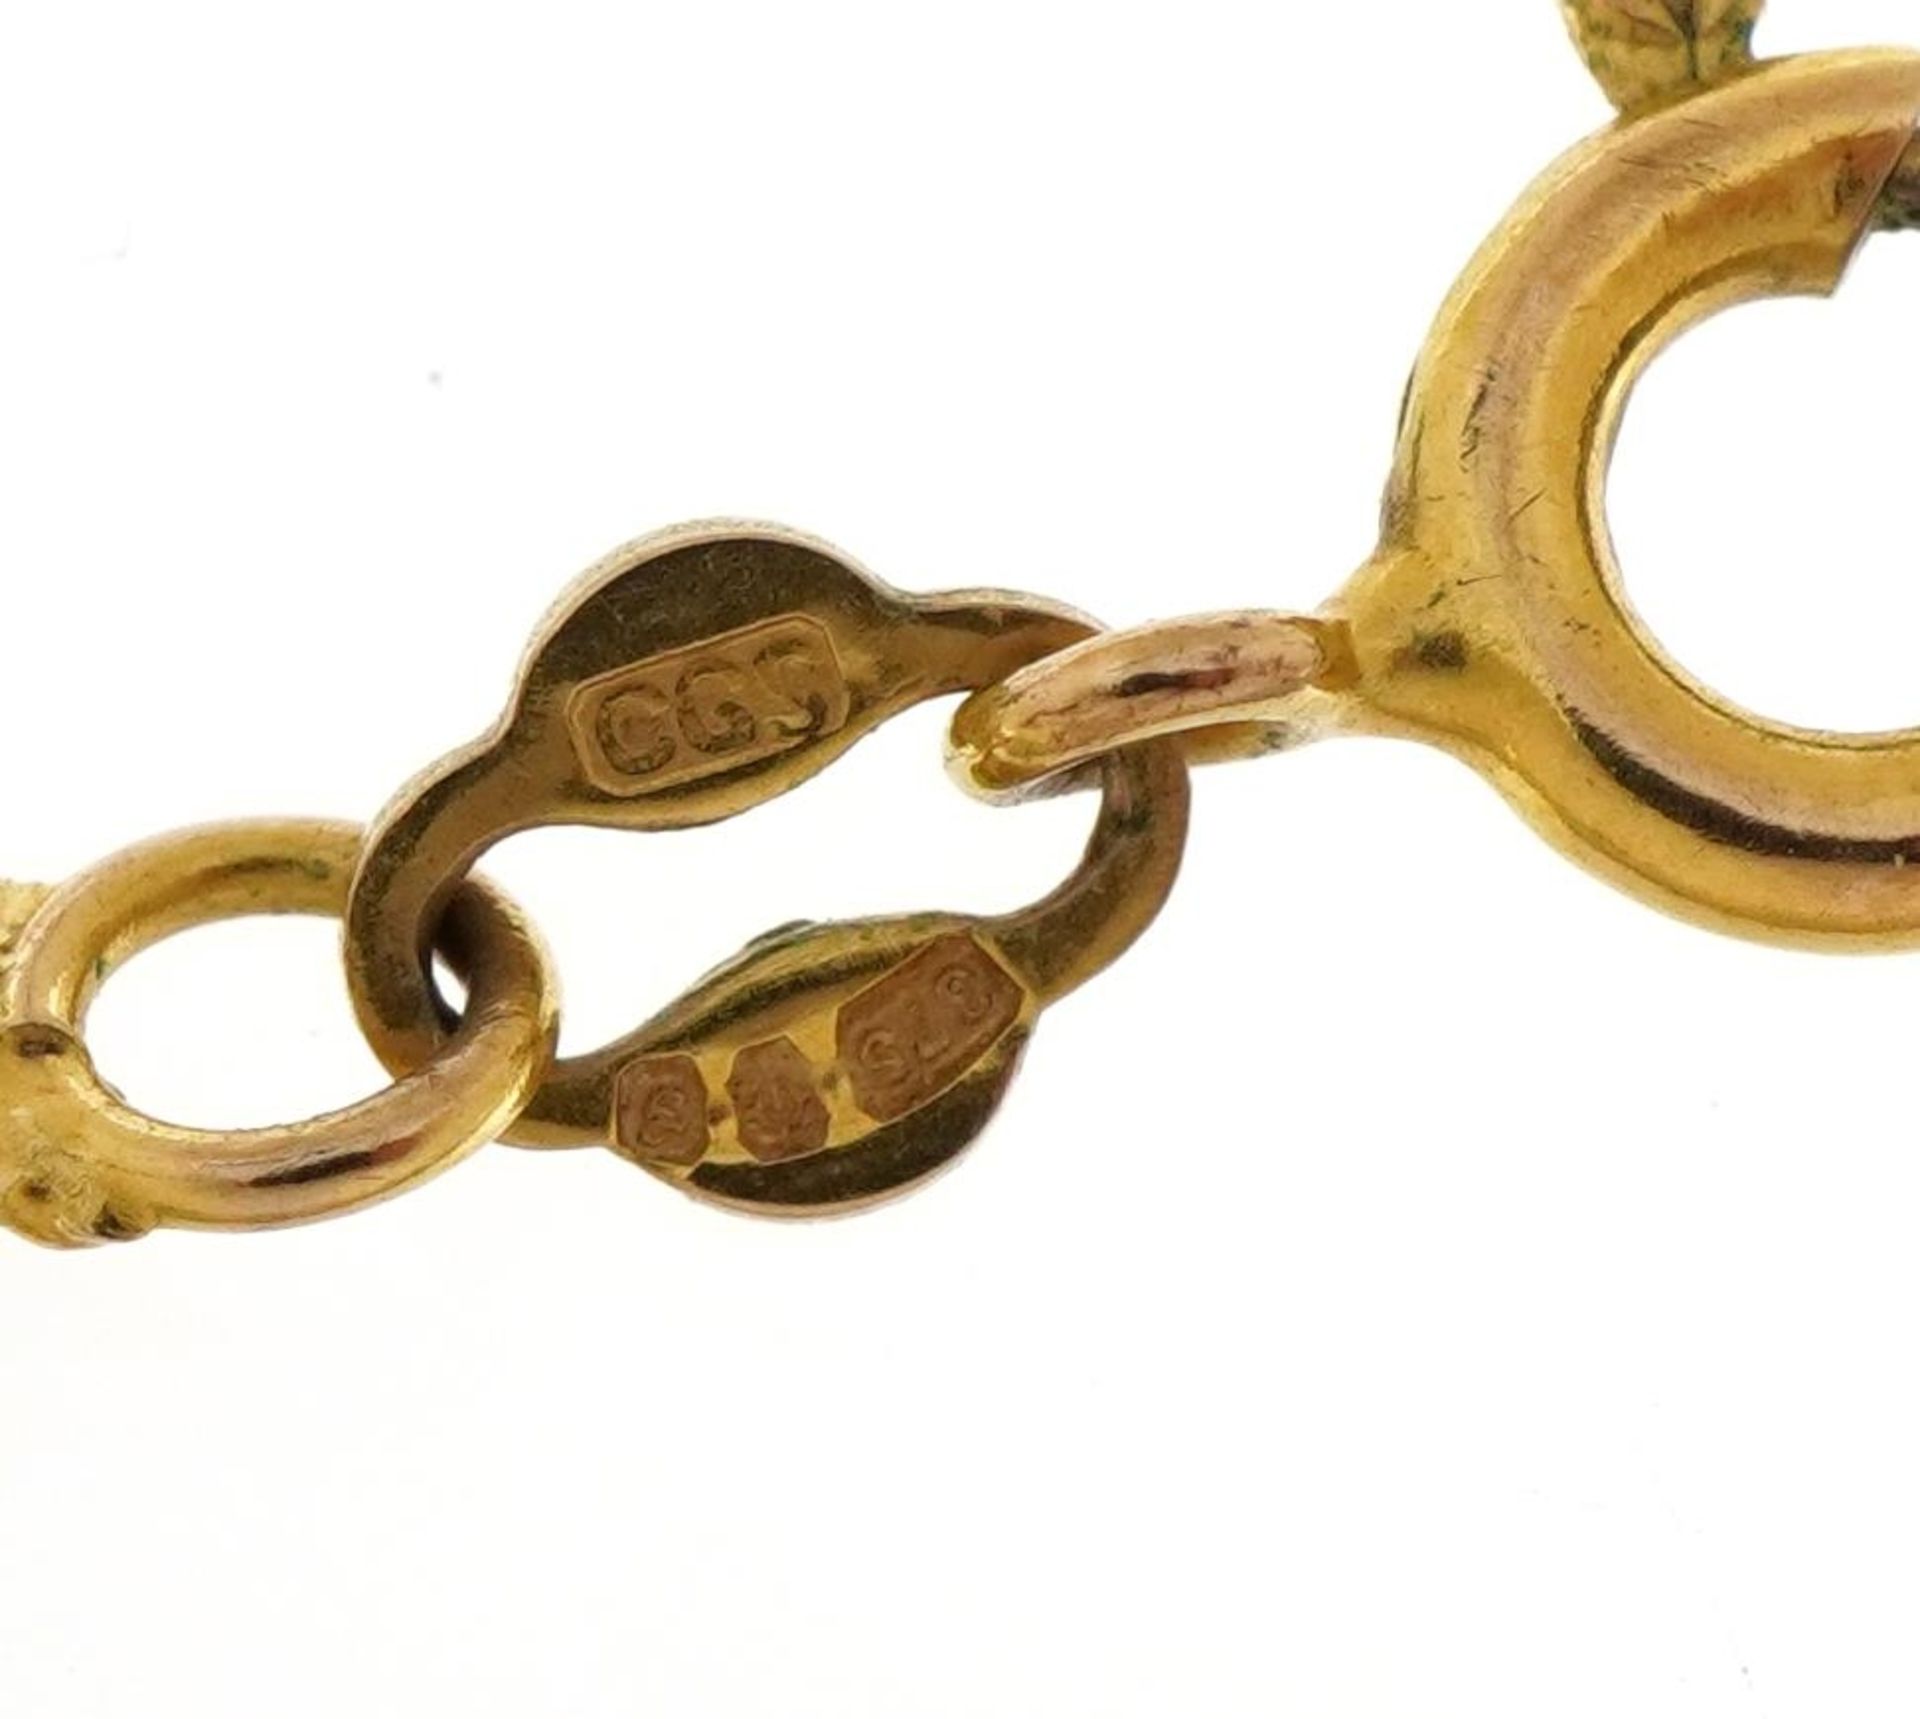 9ct gold rope twist bracelet, 18.5cm in length, 2.6g - Image 3 of 3